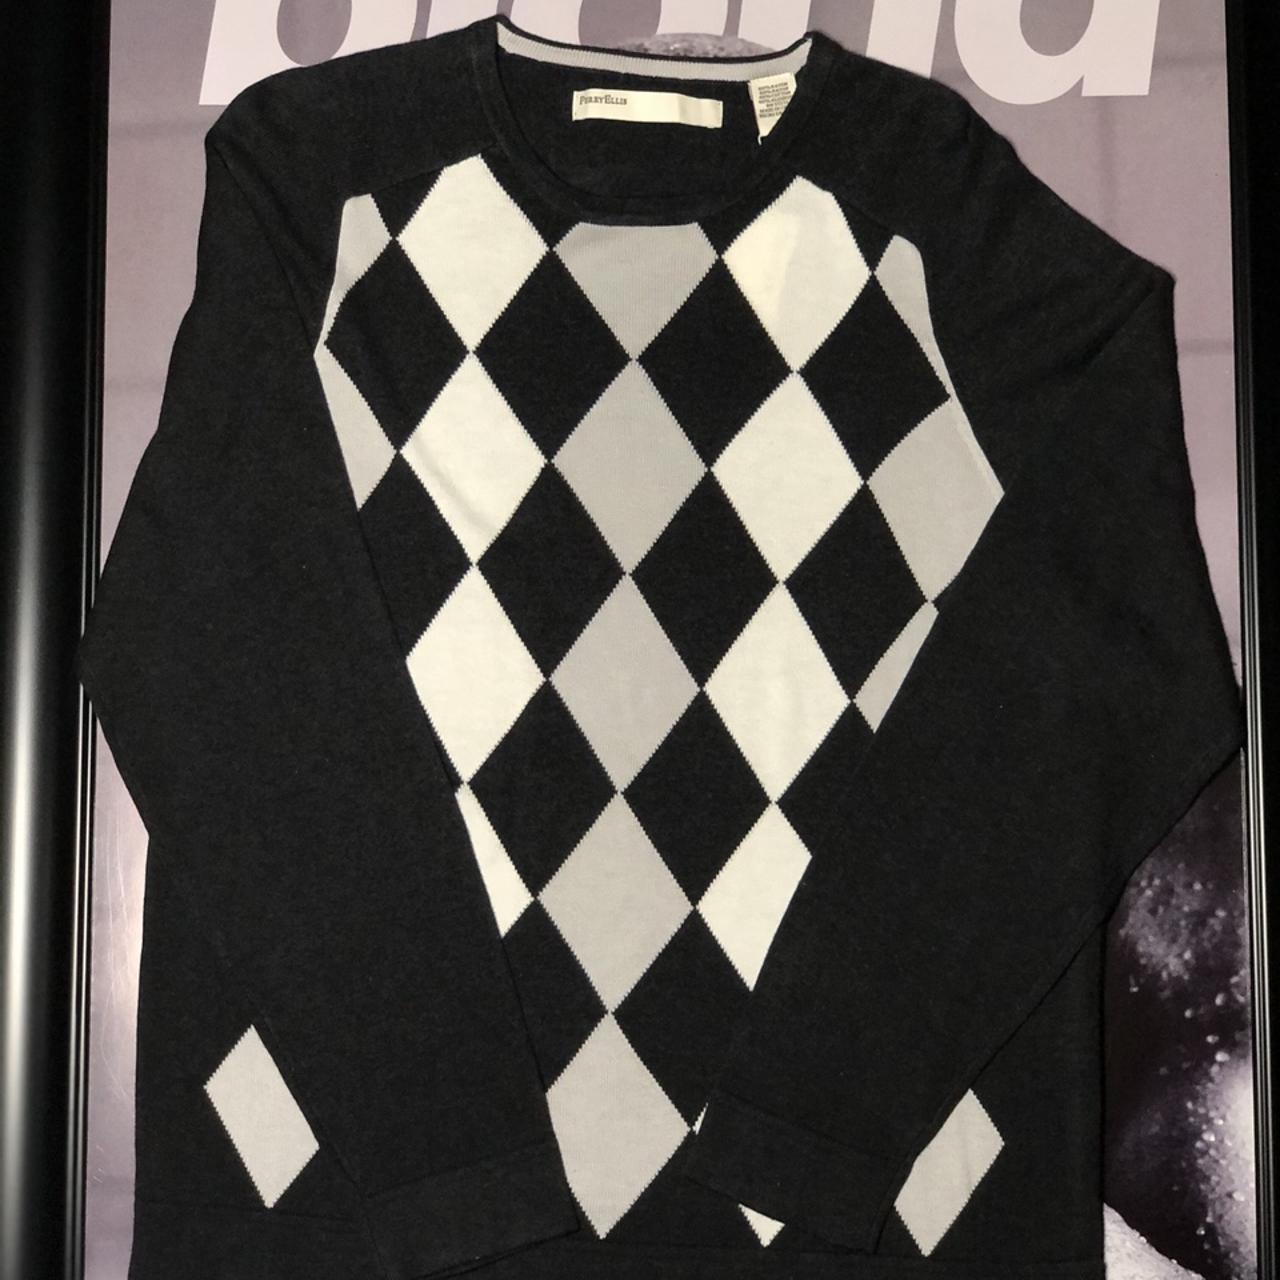 Product Image 1 - Perry Ellis Argyle Sweater

Brand new